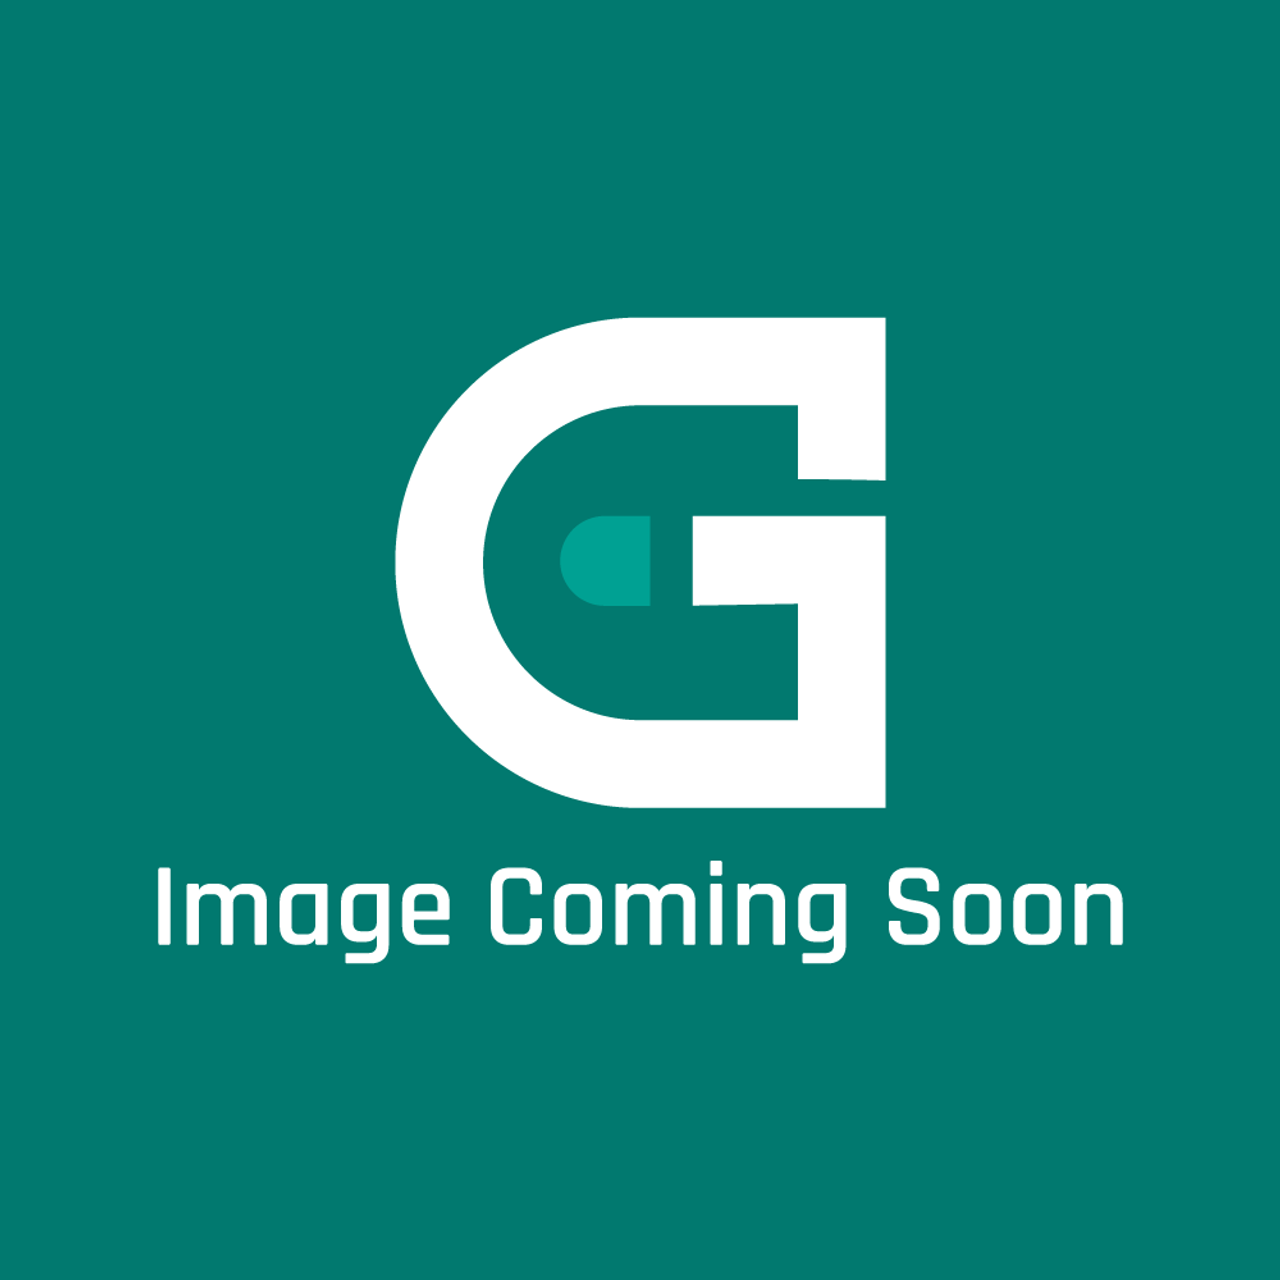 Garland 3018200 - Ce Regulator Nat 4.5 - Image Coming Soon!